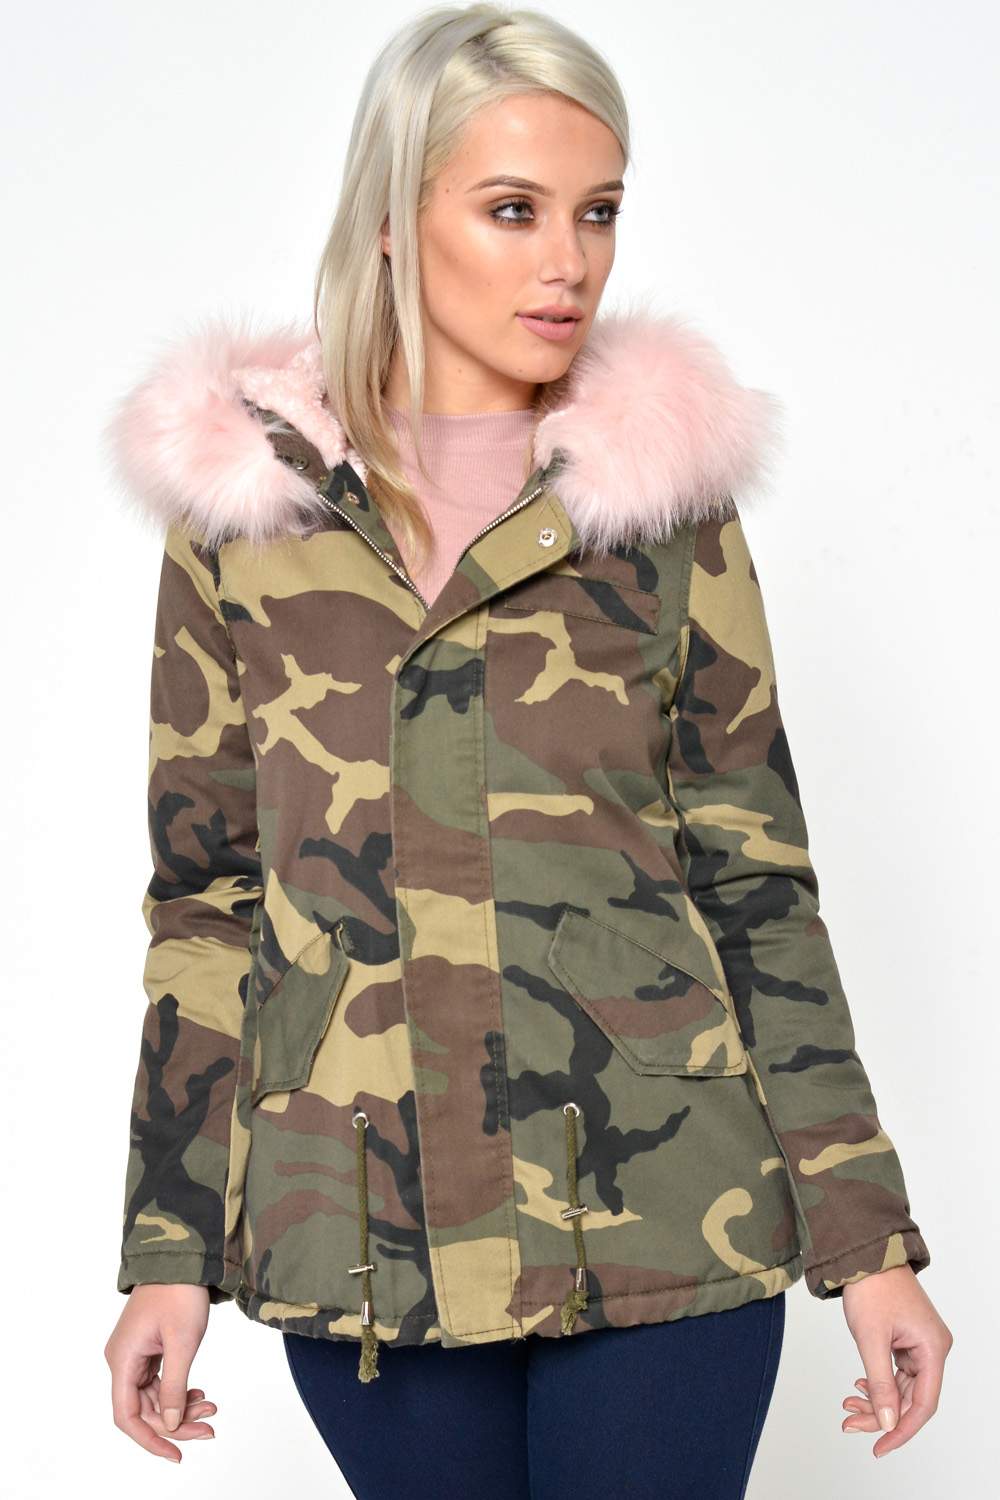 Yu Me Polly Camouflage Fur Trim Jacket in Pink | iCLOTHING - iCLOTHING